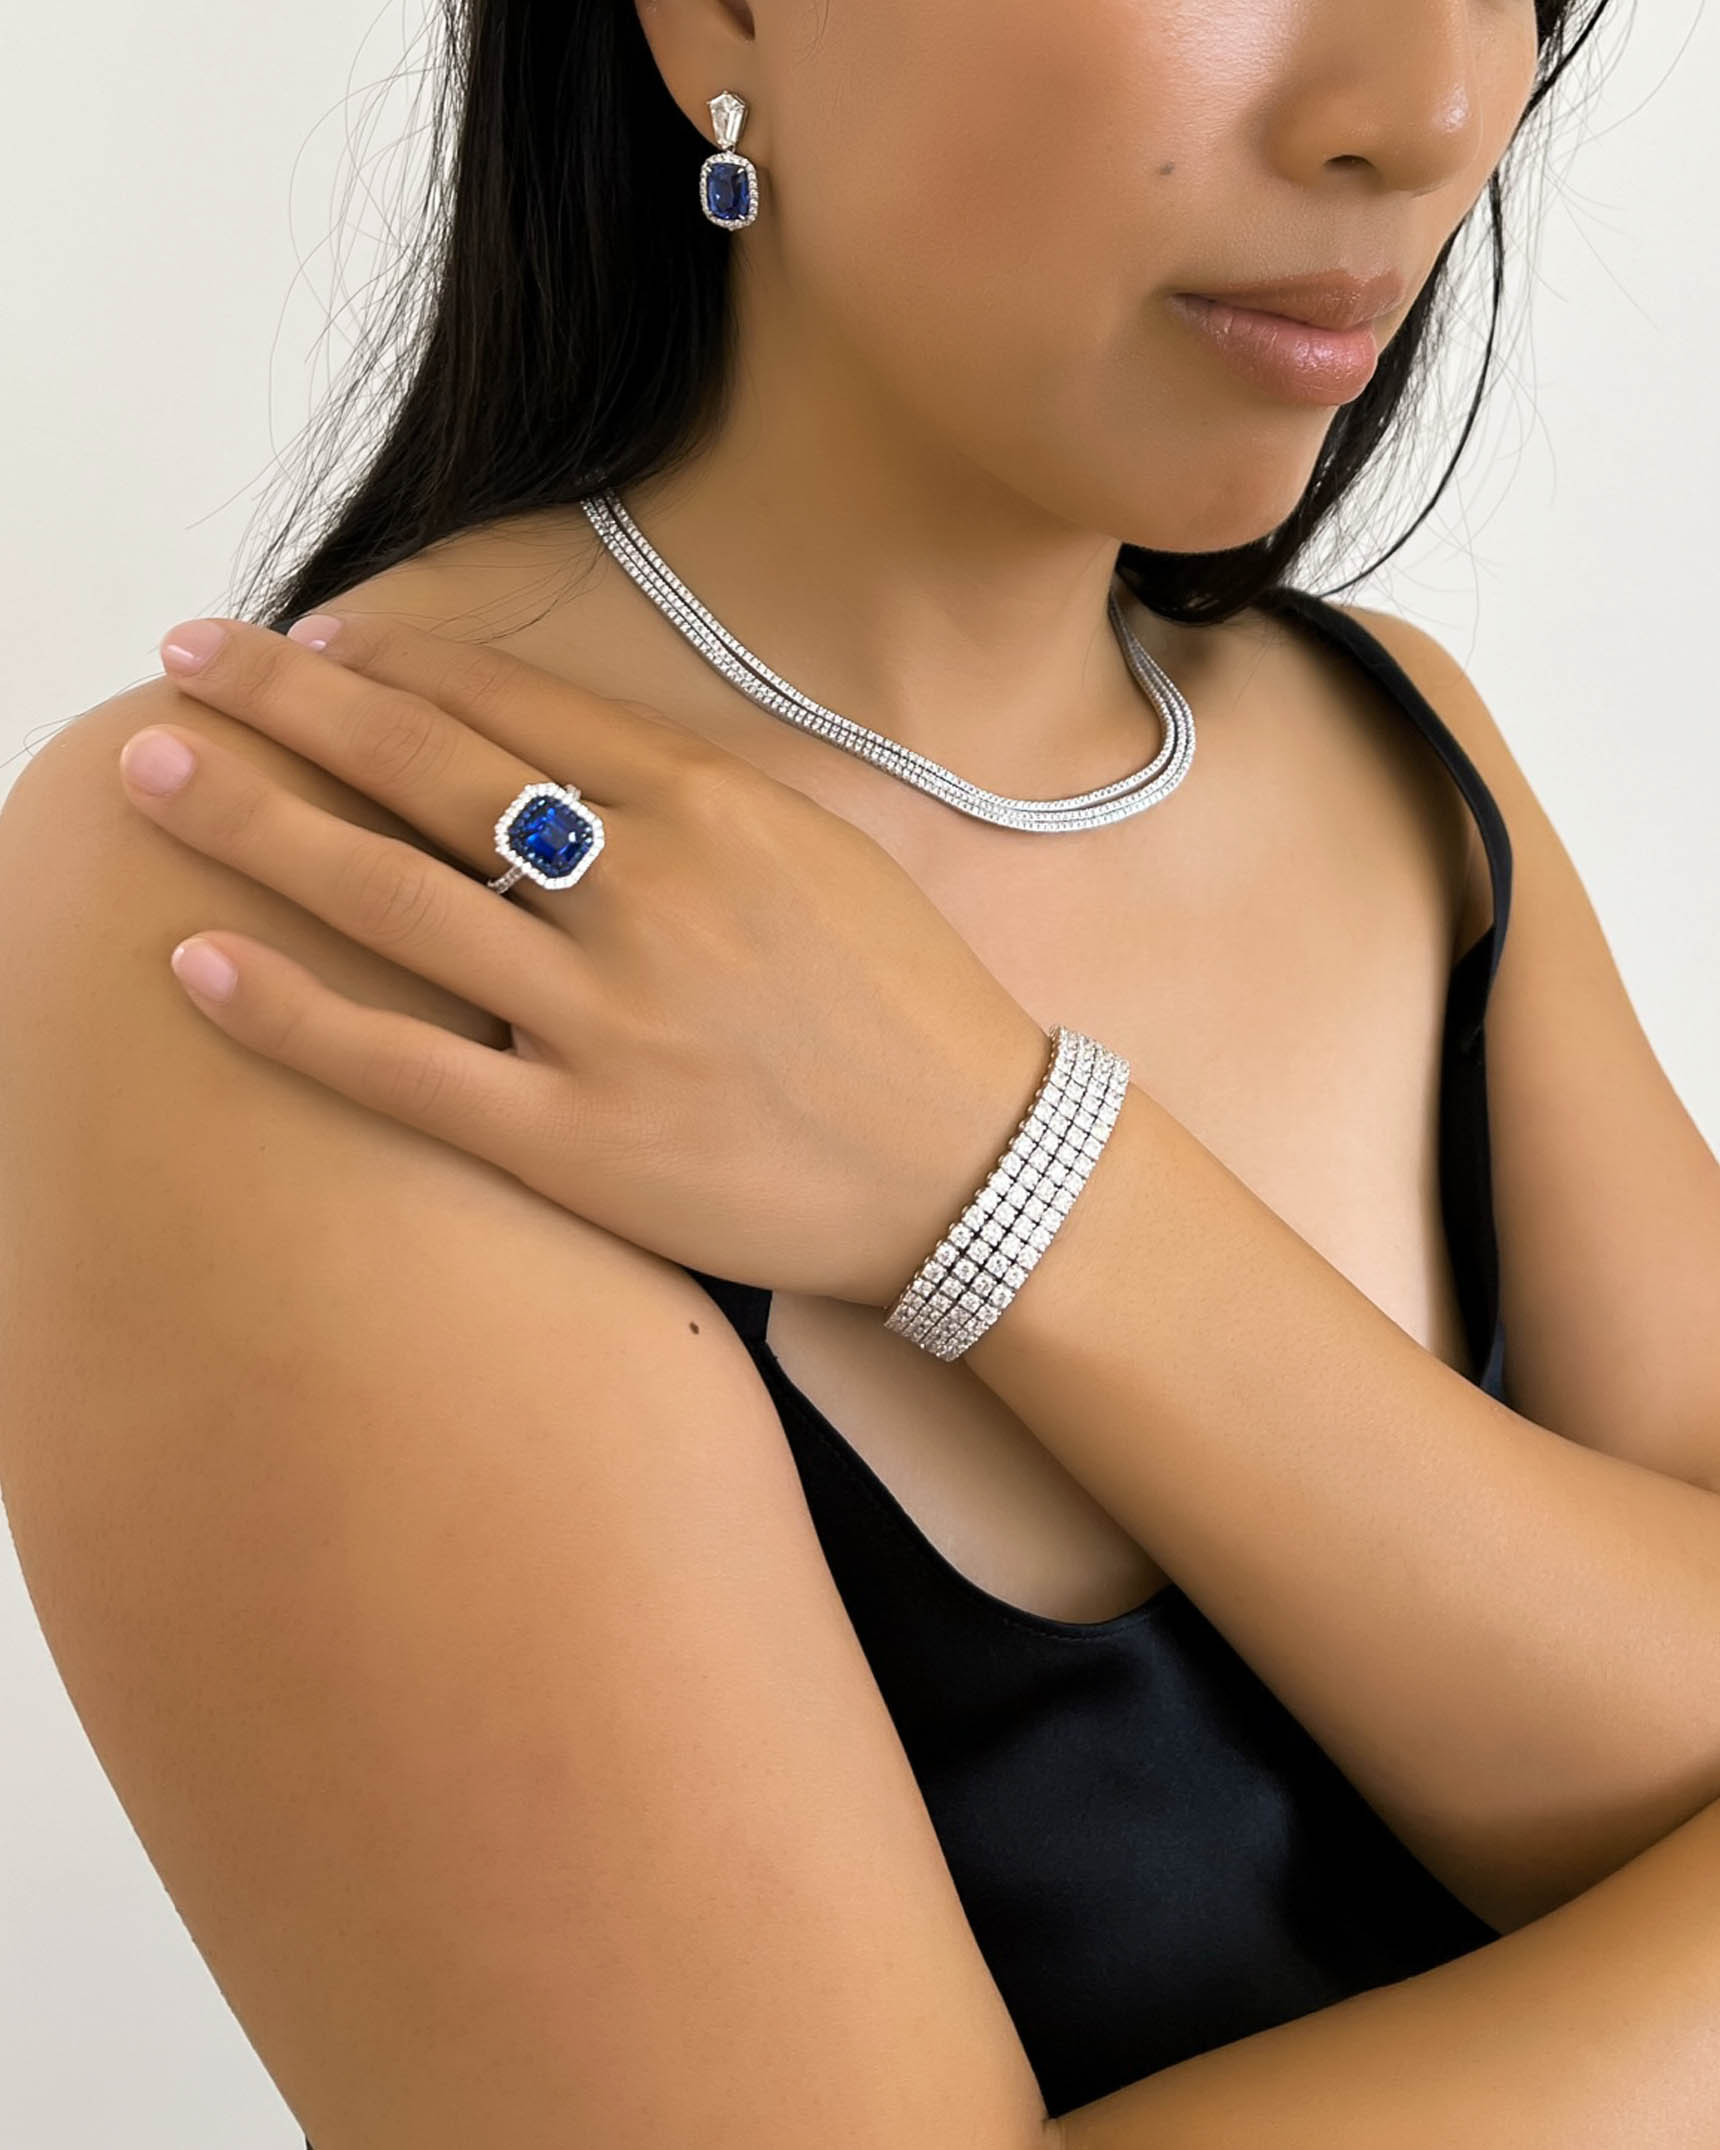 Blue Sapphire and Diamond Earrings_Ring_Necklace and Bracelet ECDKK02482 – RCDSA03007 – NDOTK03347 – BDOTK04373